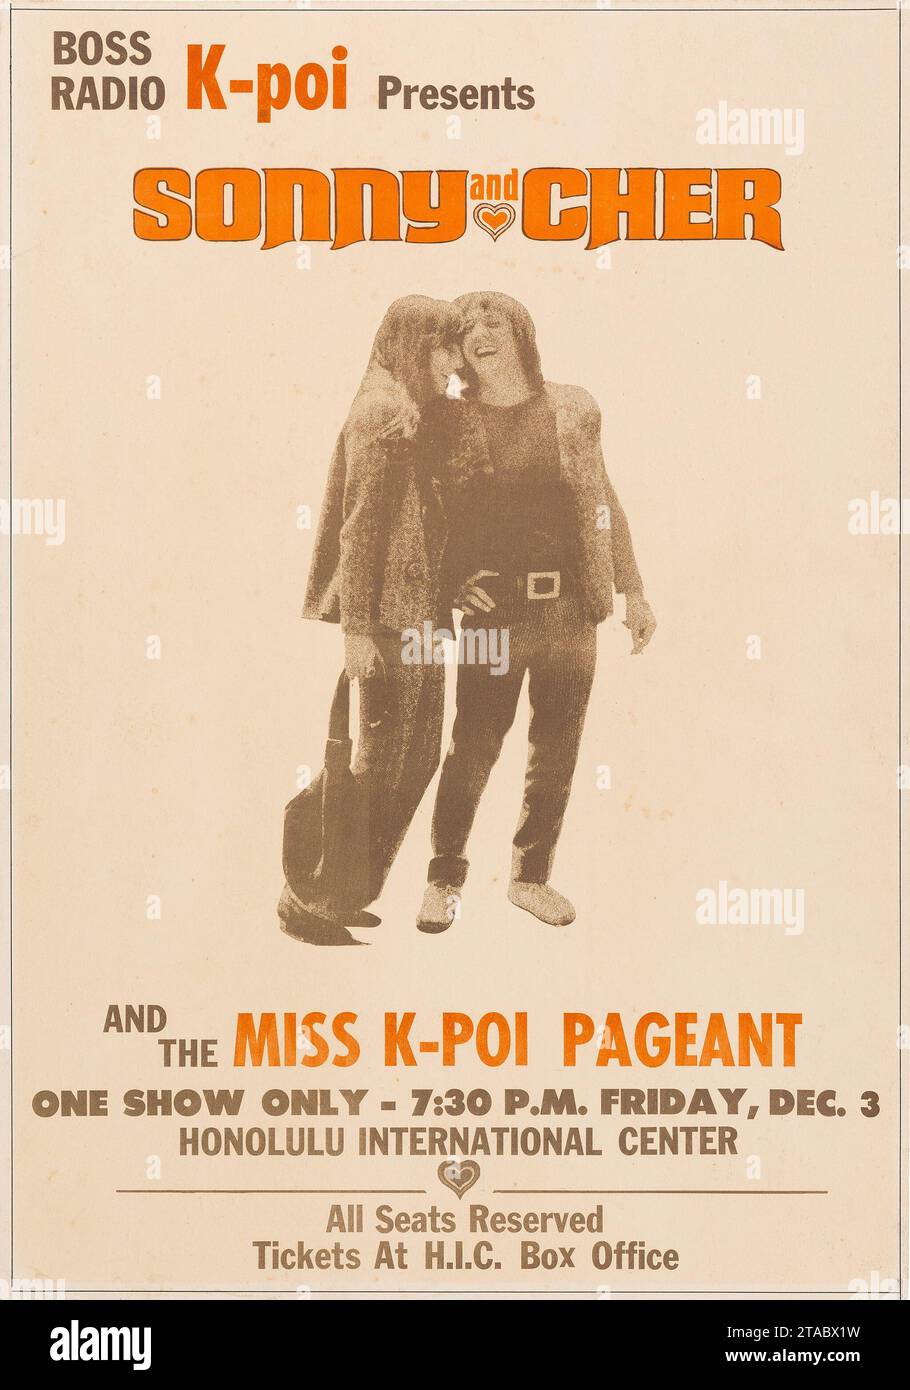 K-poi Presents Sonny And Cher - Hawaii, Honolulu International Center Concert Poster (1965) Stock Photo